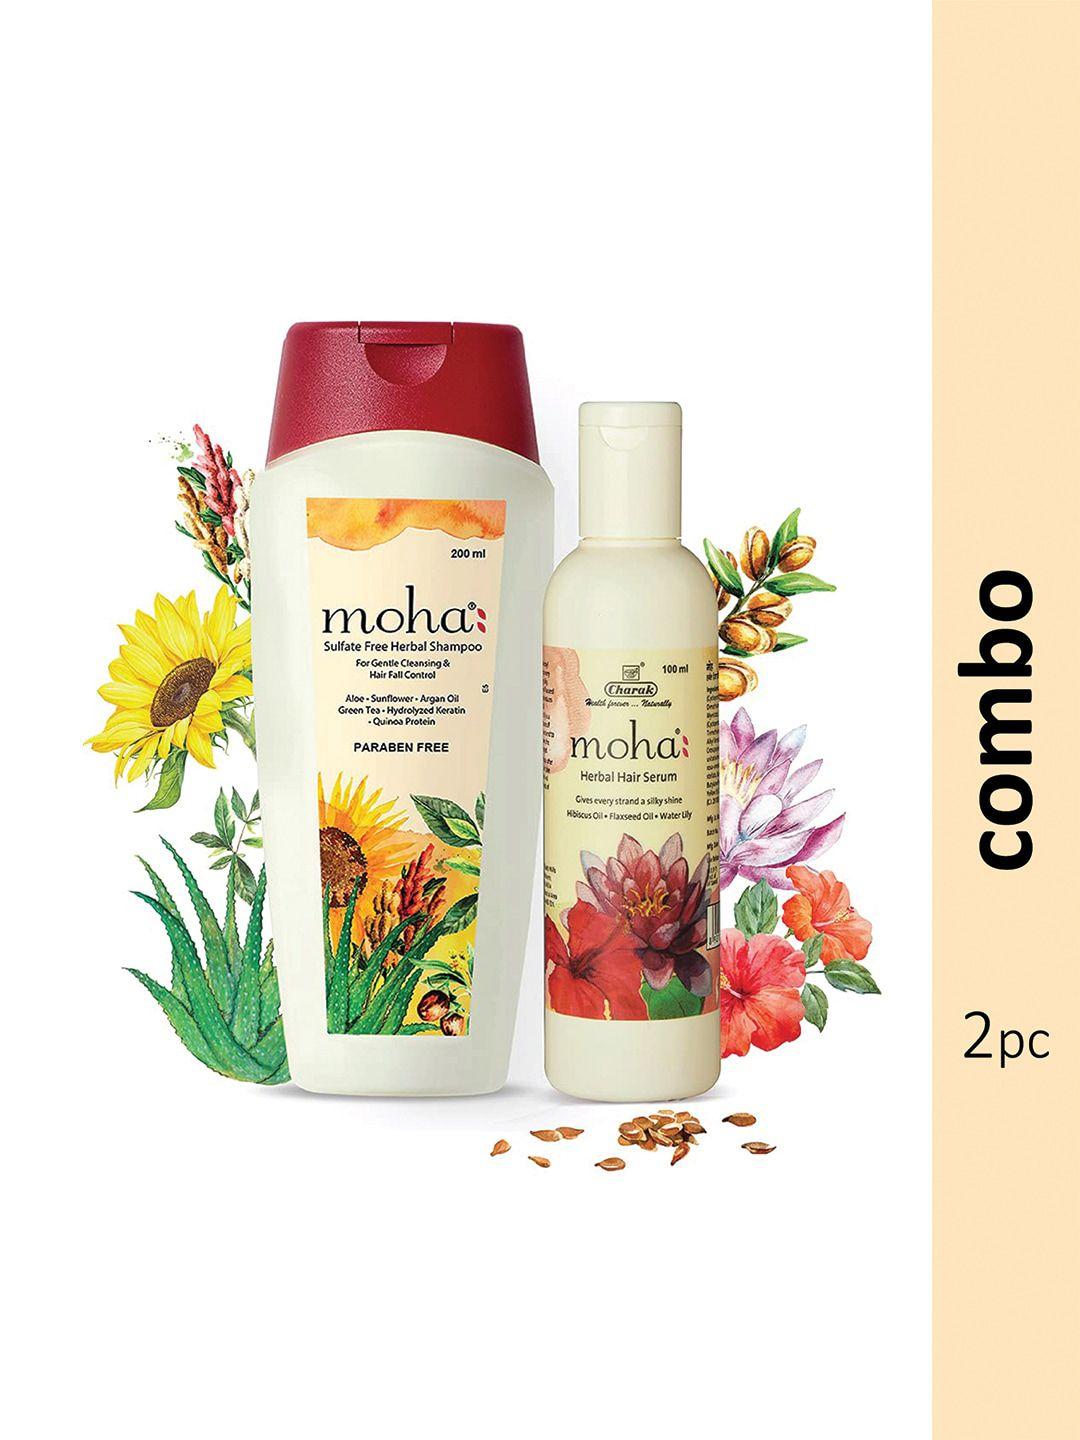 moha sulfate-free sunflower oil shampoo 200 ml & herbal hair serum 100 ml